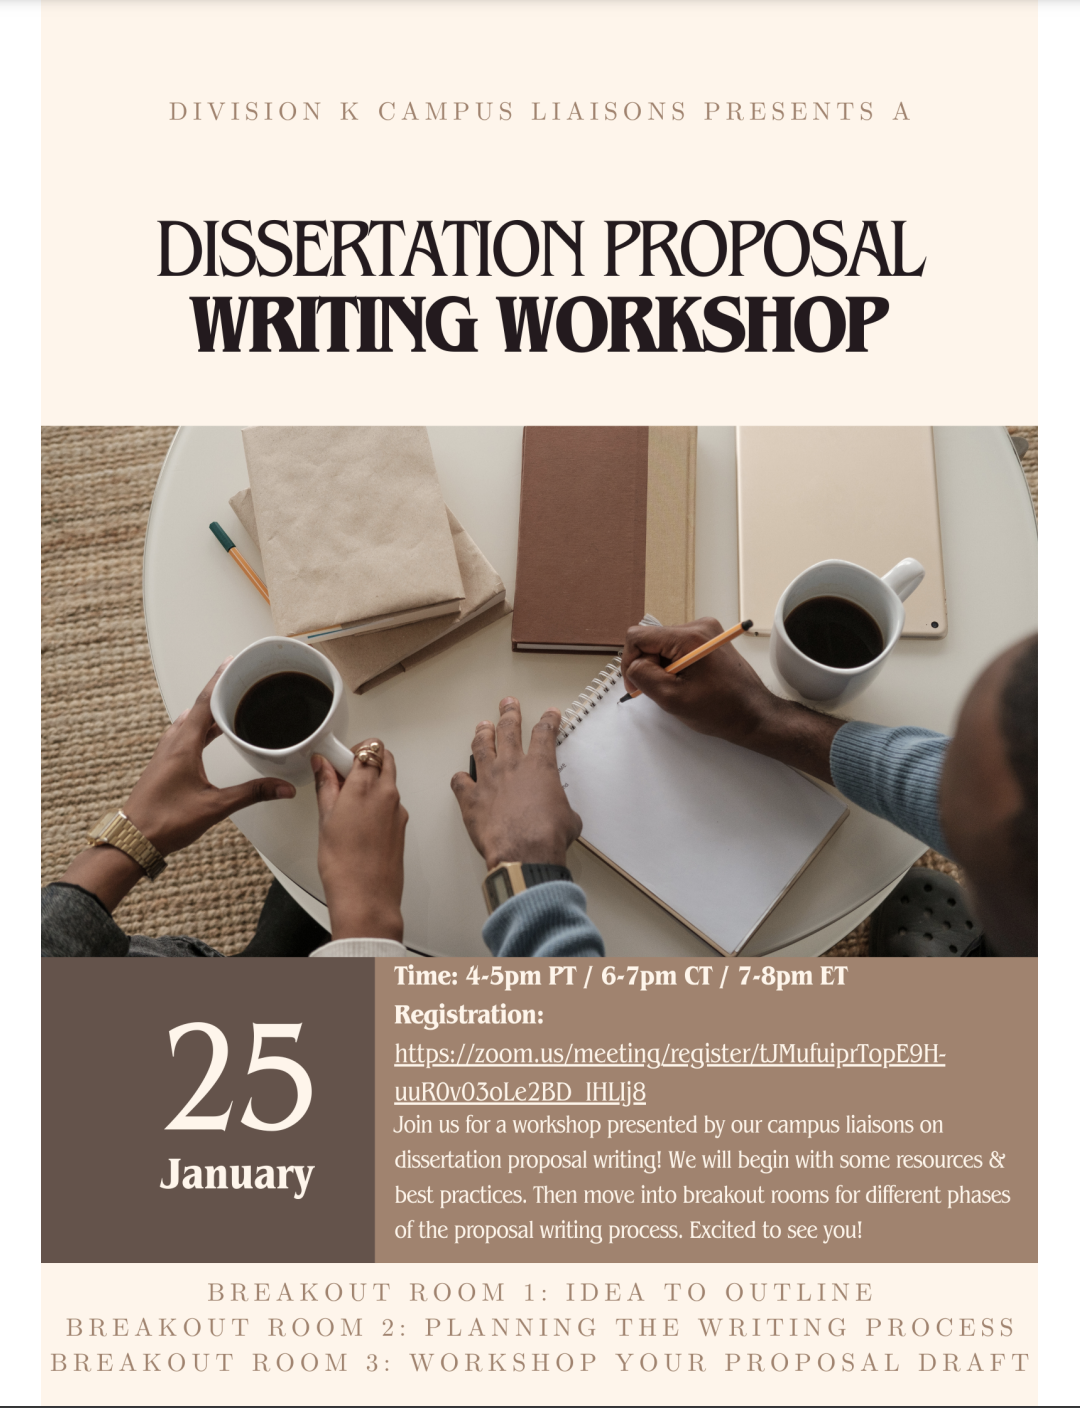 Dissertation Proposal Writing Workshop this THURSDAY Jan.25